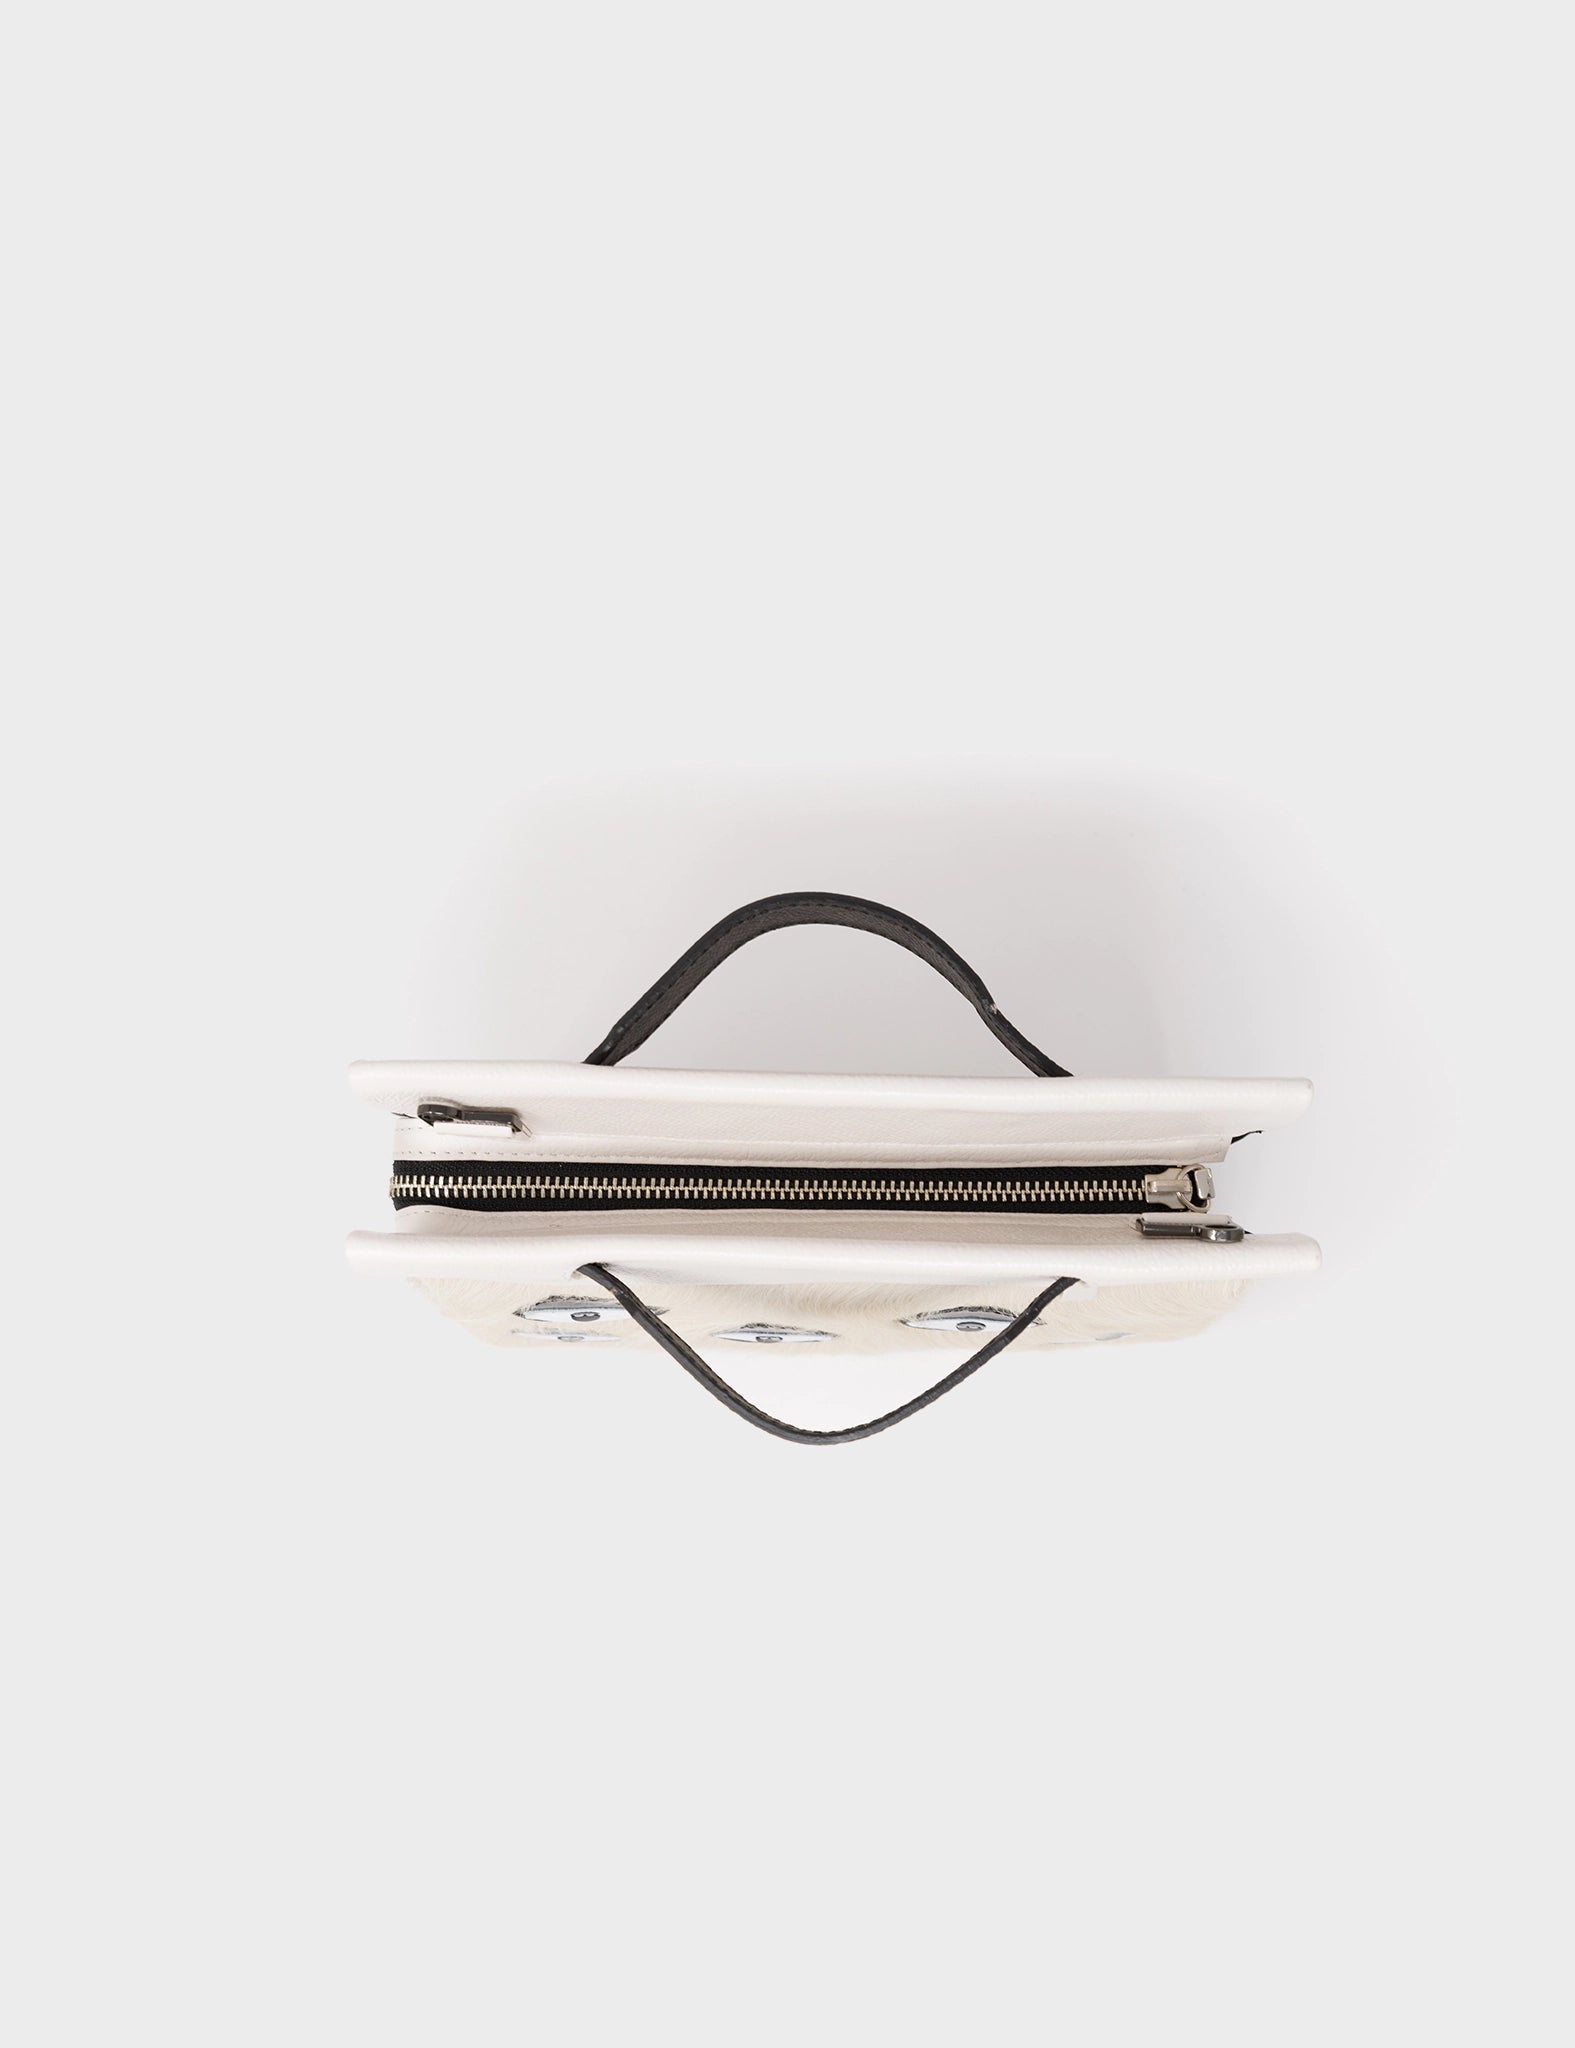 White Leather Crossbody Purses Top Handle Small Handbags